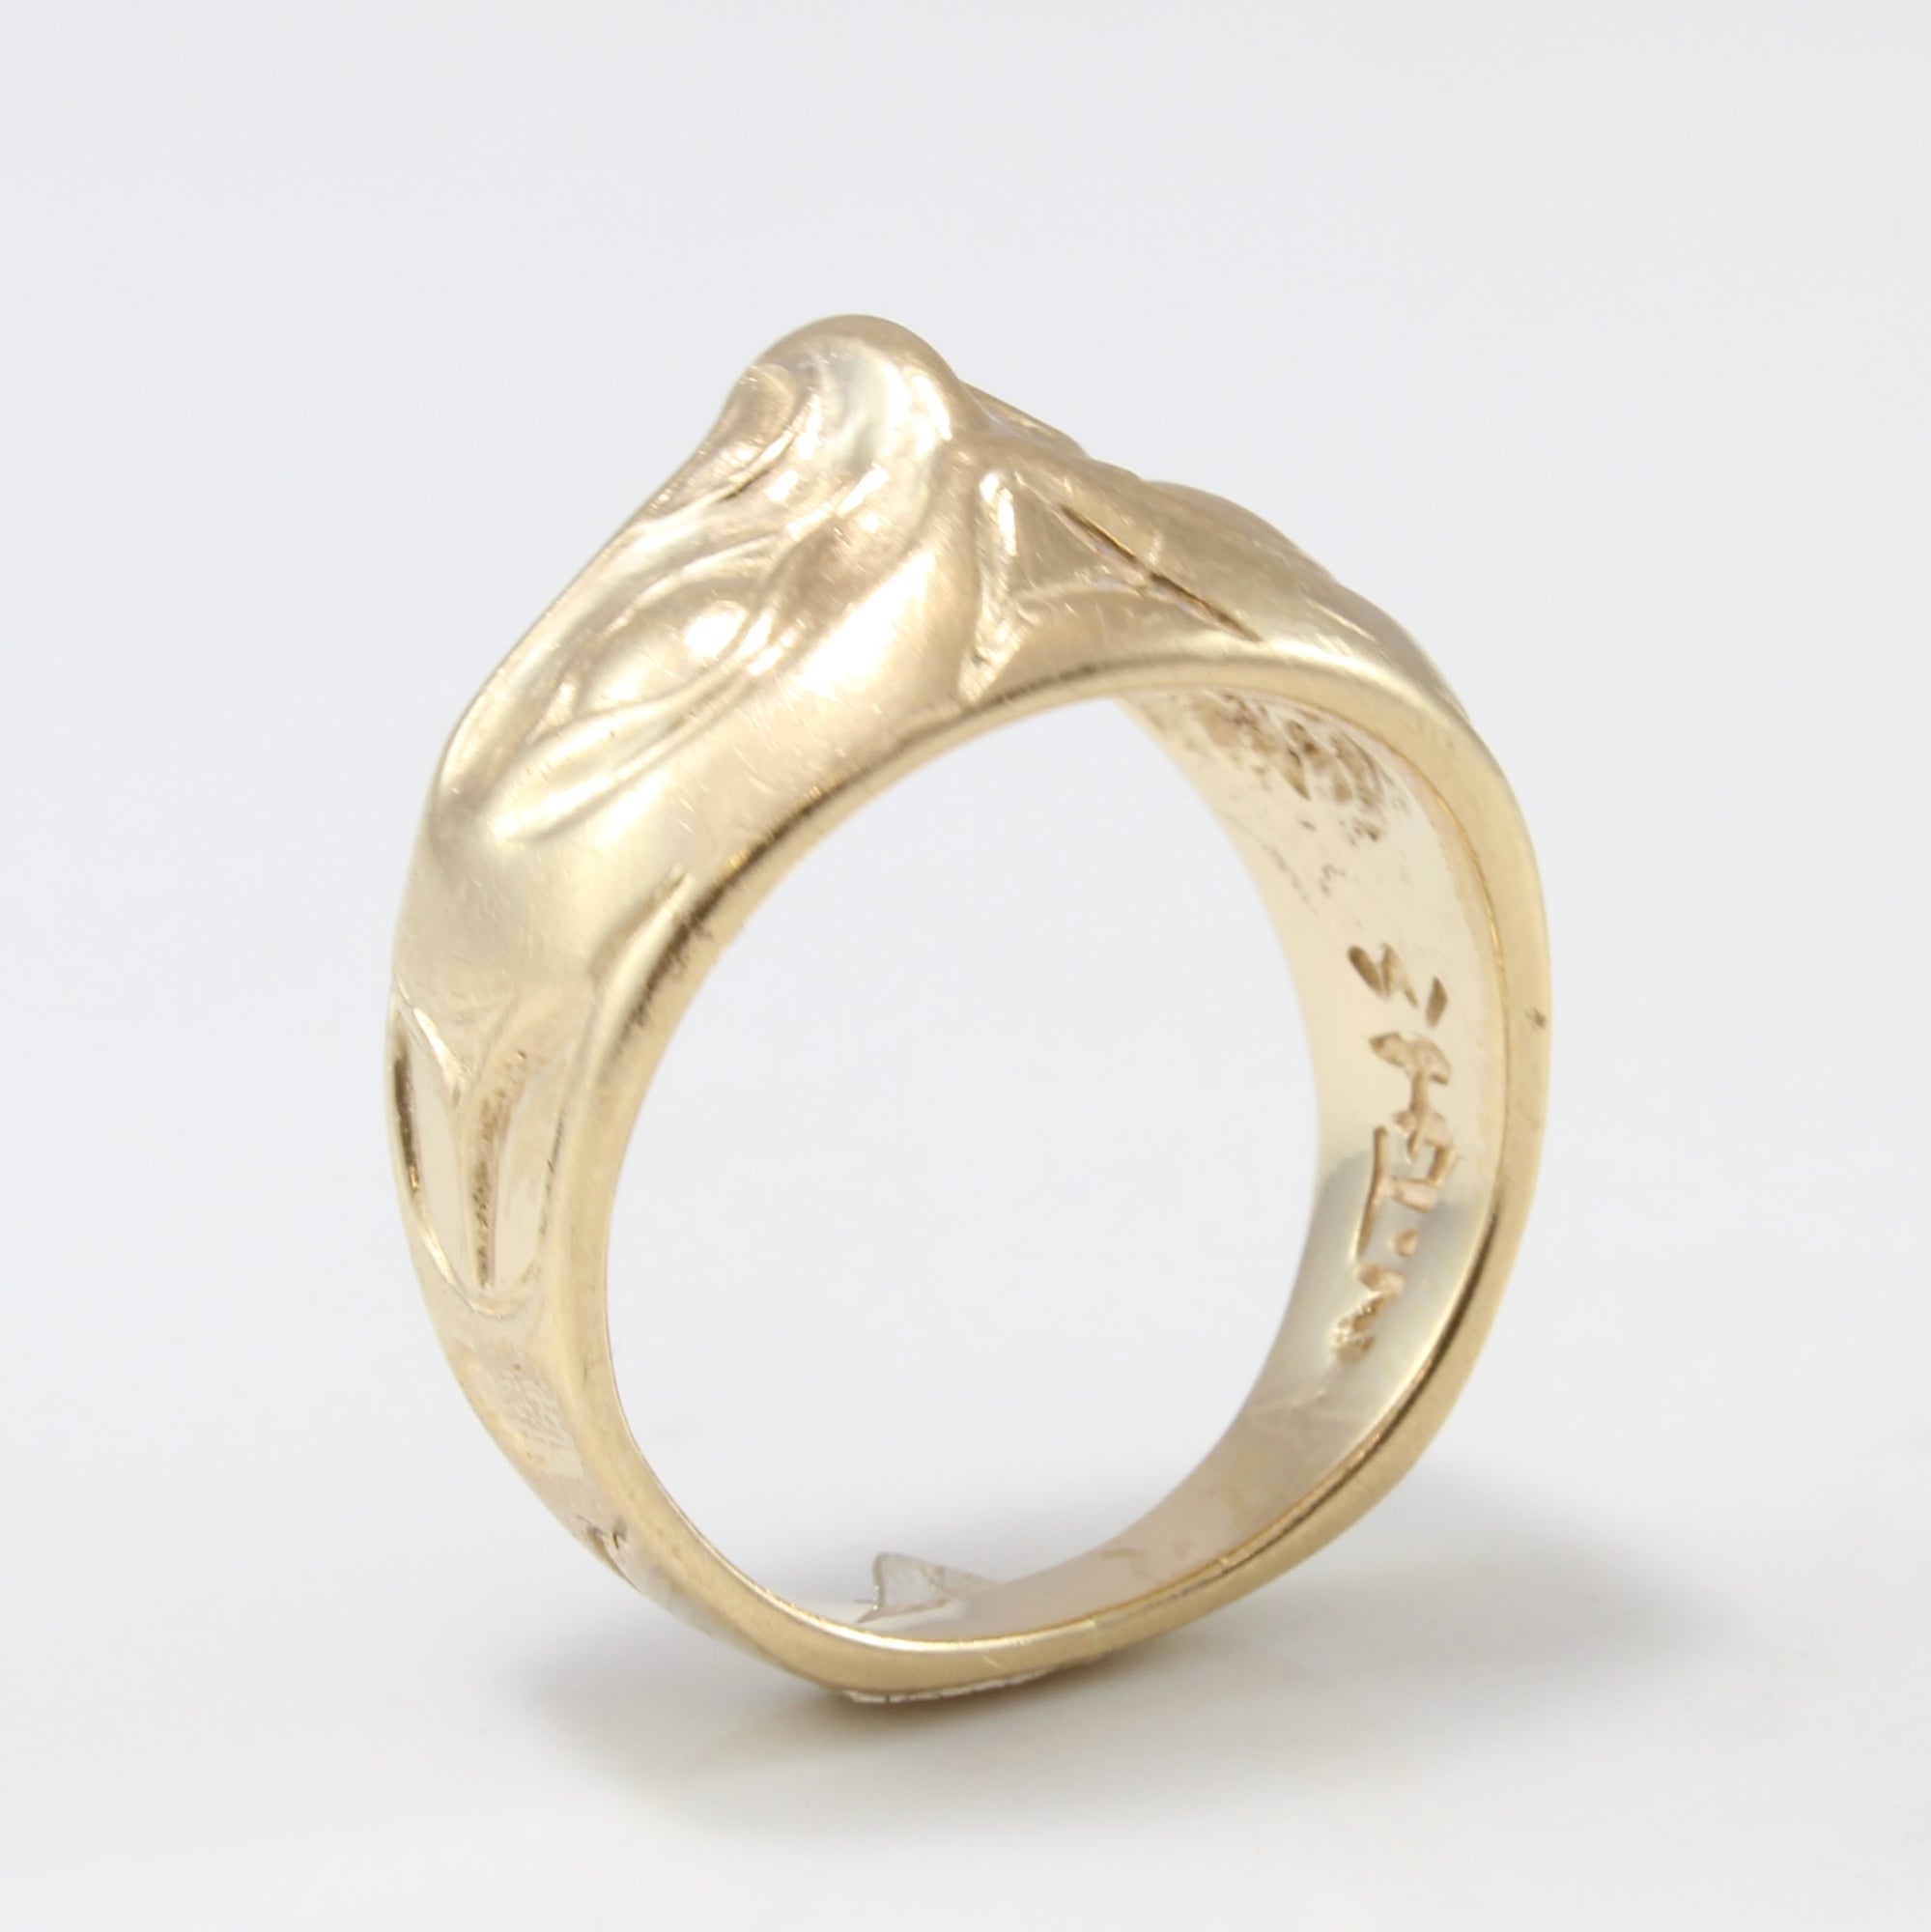 Indigenous Owl Art Gold Ring | SZ 9 |